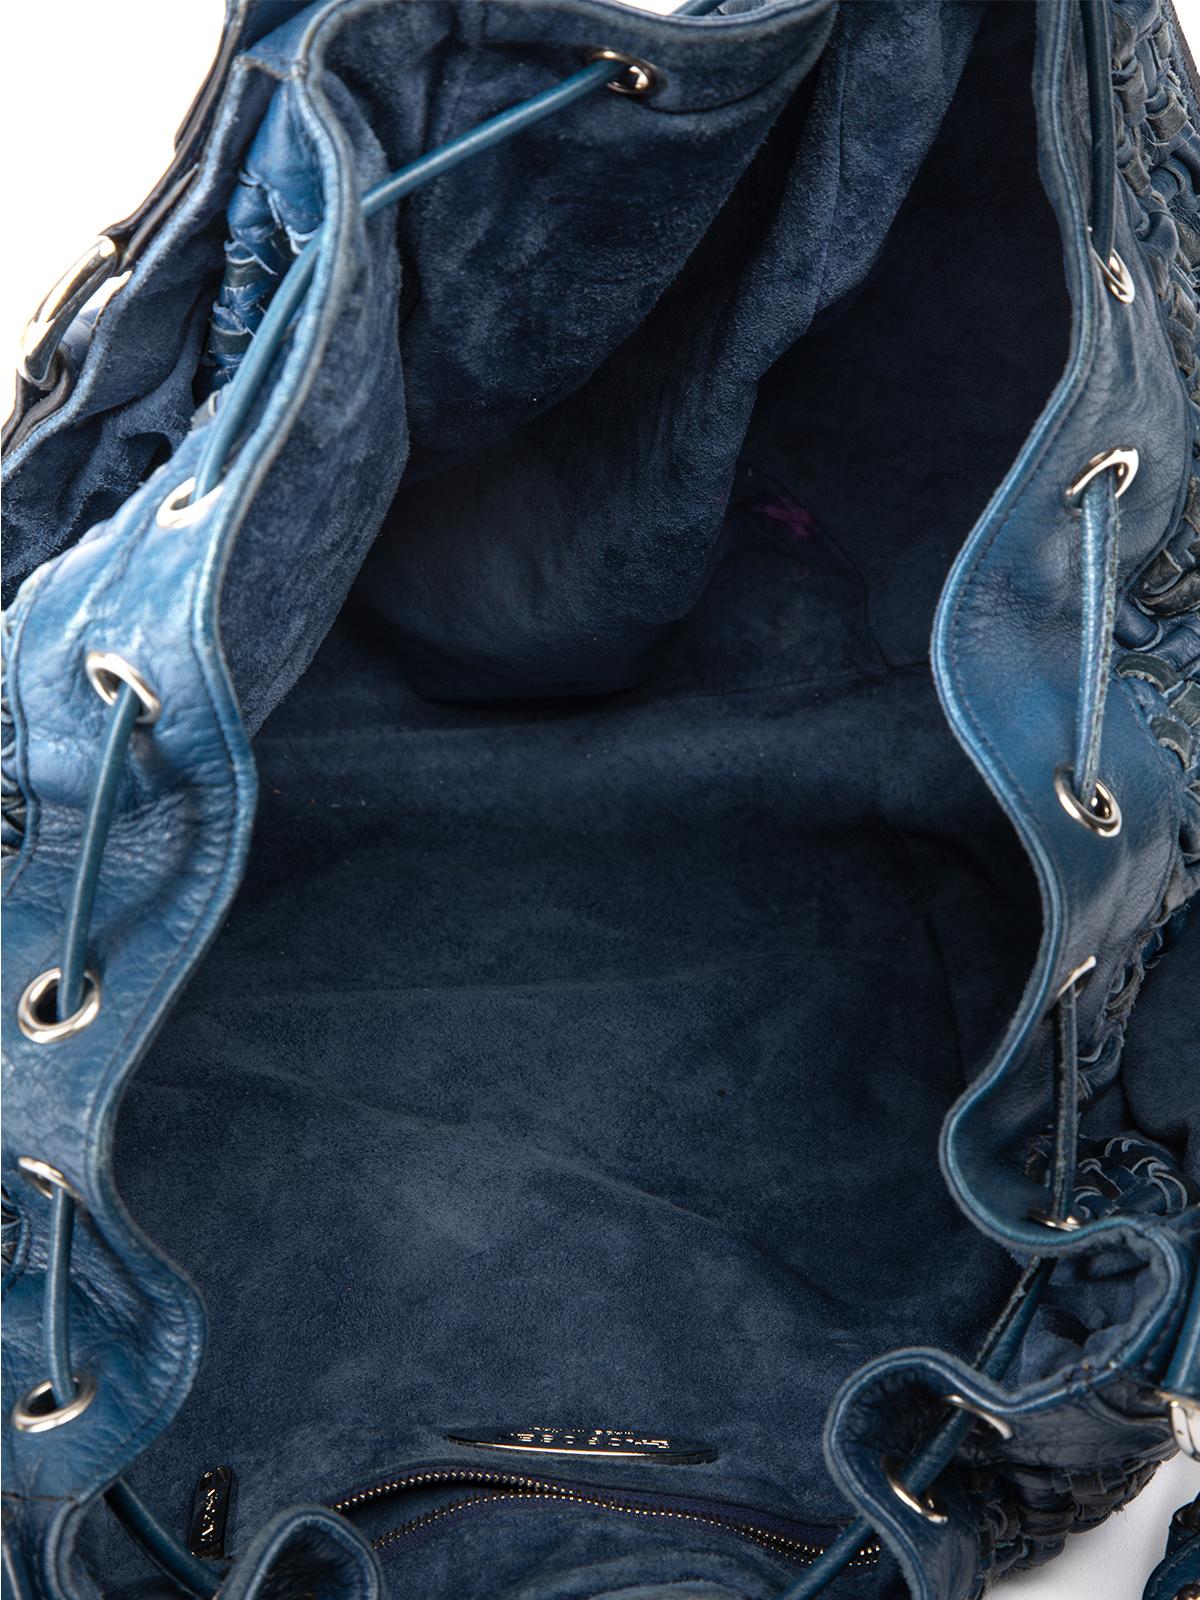 Pre-Loved Zac Posen Women's Blue Leather Woven Shoulder Bag 3